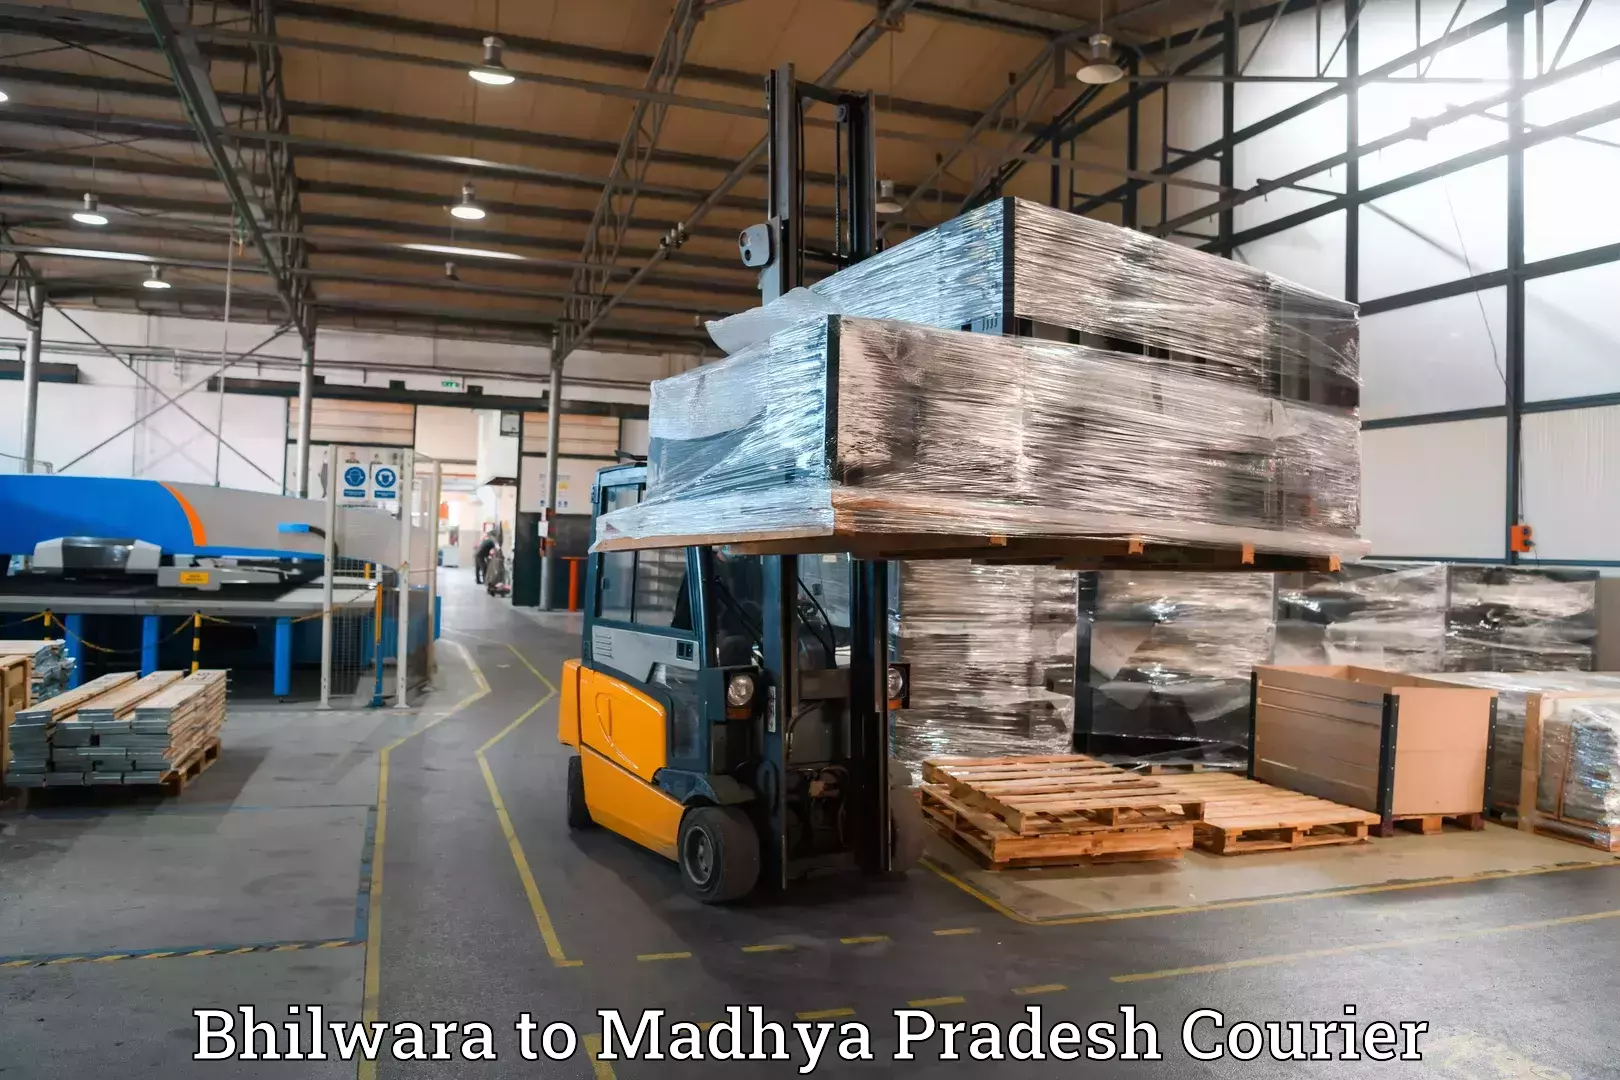 Luggage shipment specialists Bhilwara to Vijayraghavgarh